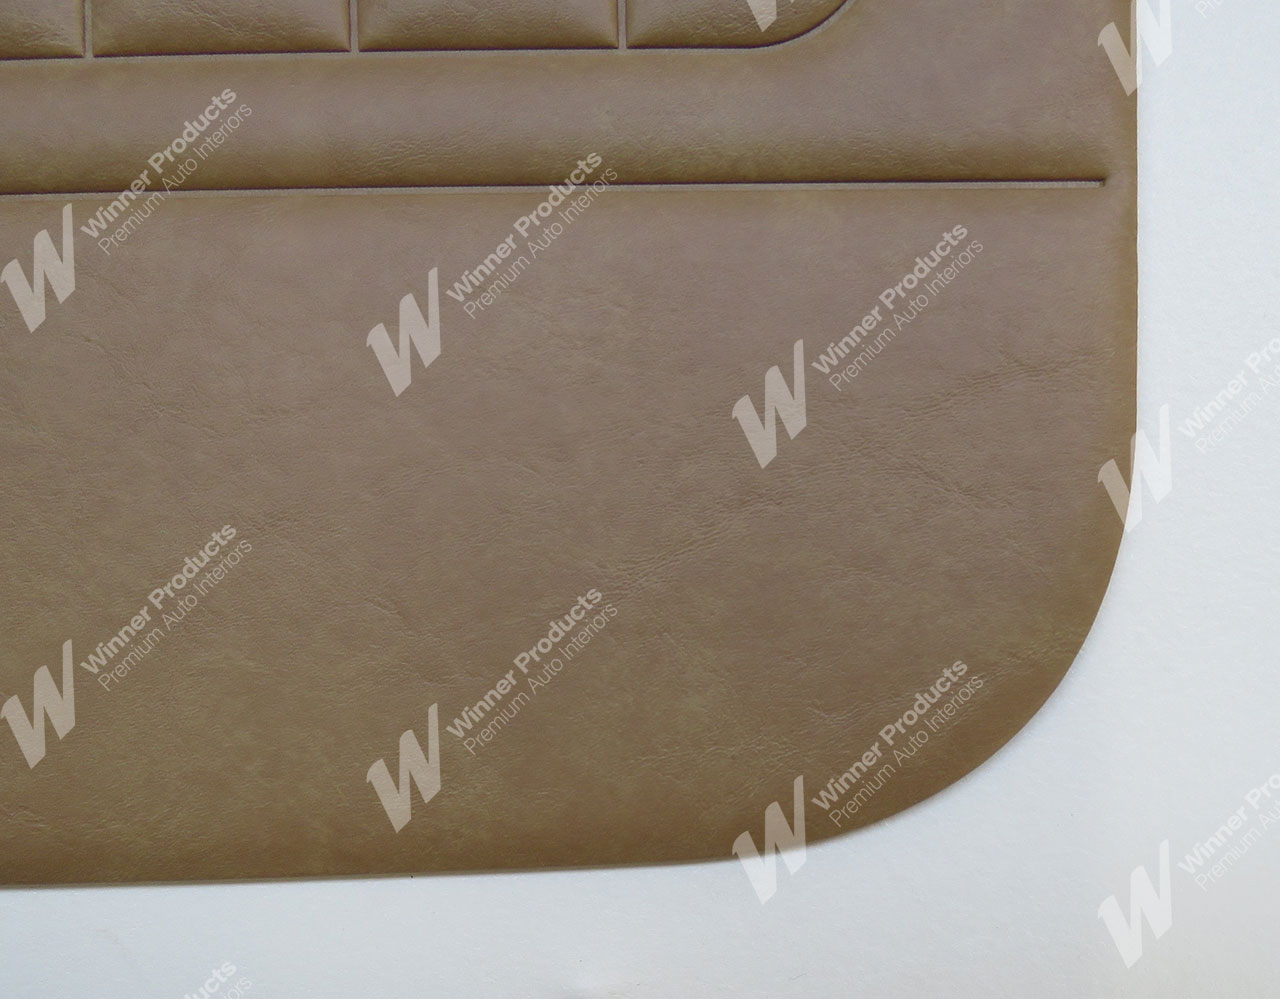 Holden Kingswood WB Kingswood Ute 63X Buckskin & Cloth Door Trims (Image 3 of 3)